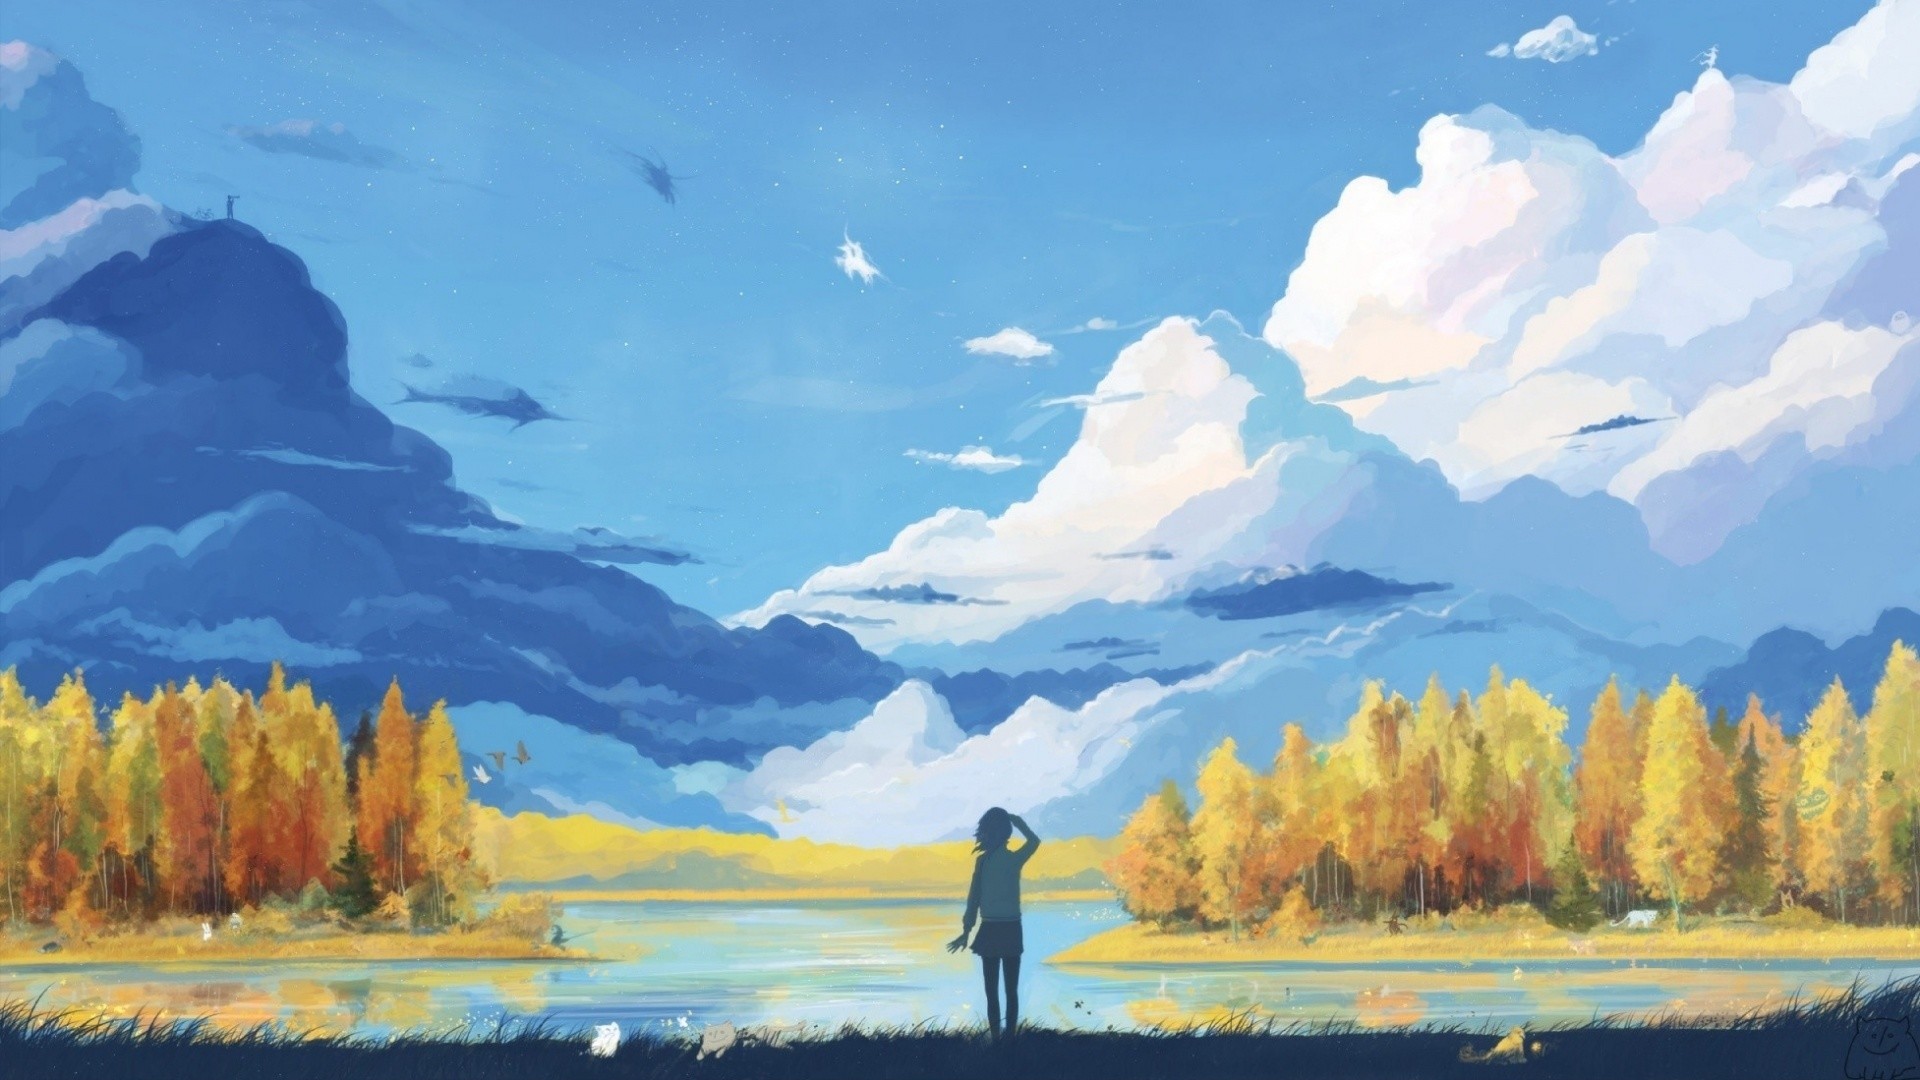 61 Cool Anime Landscape Wallpapers On Wallpapersafari